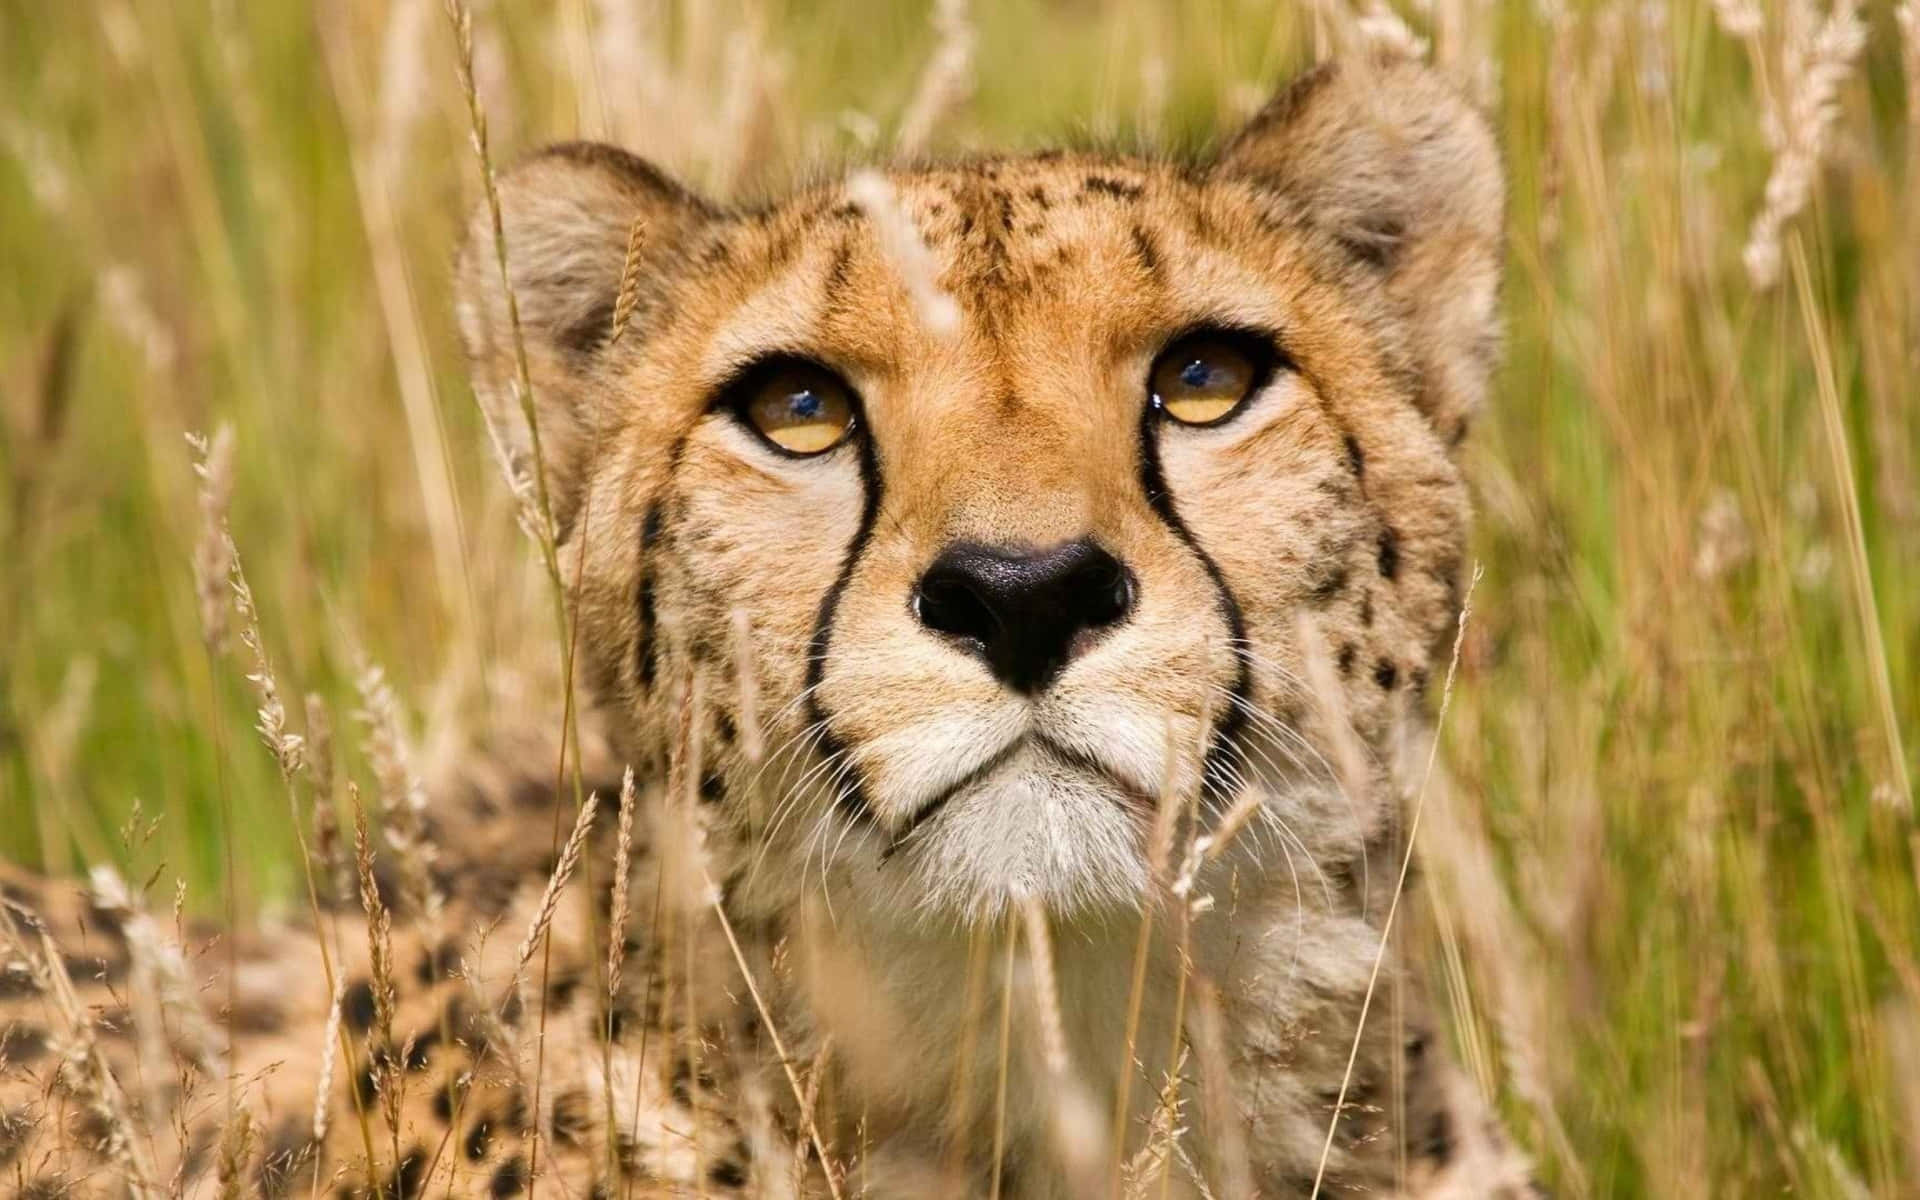 A Baby Cheetah exploring its new home Wallpaper